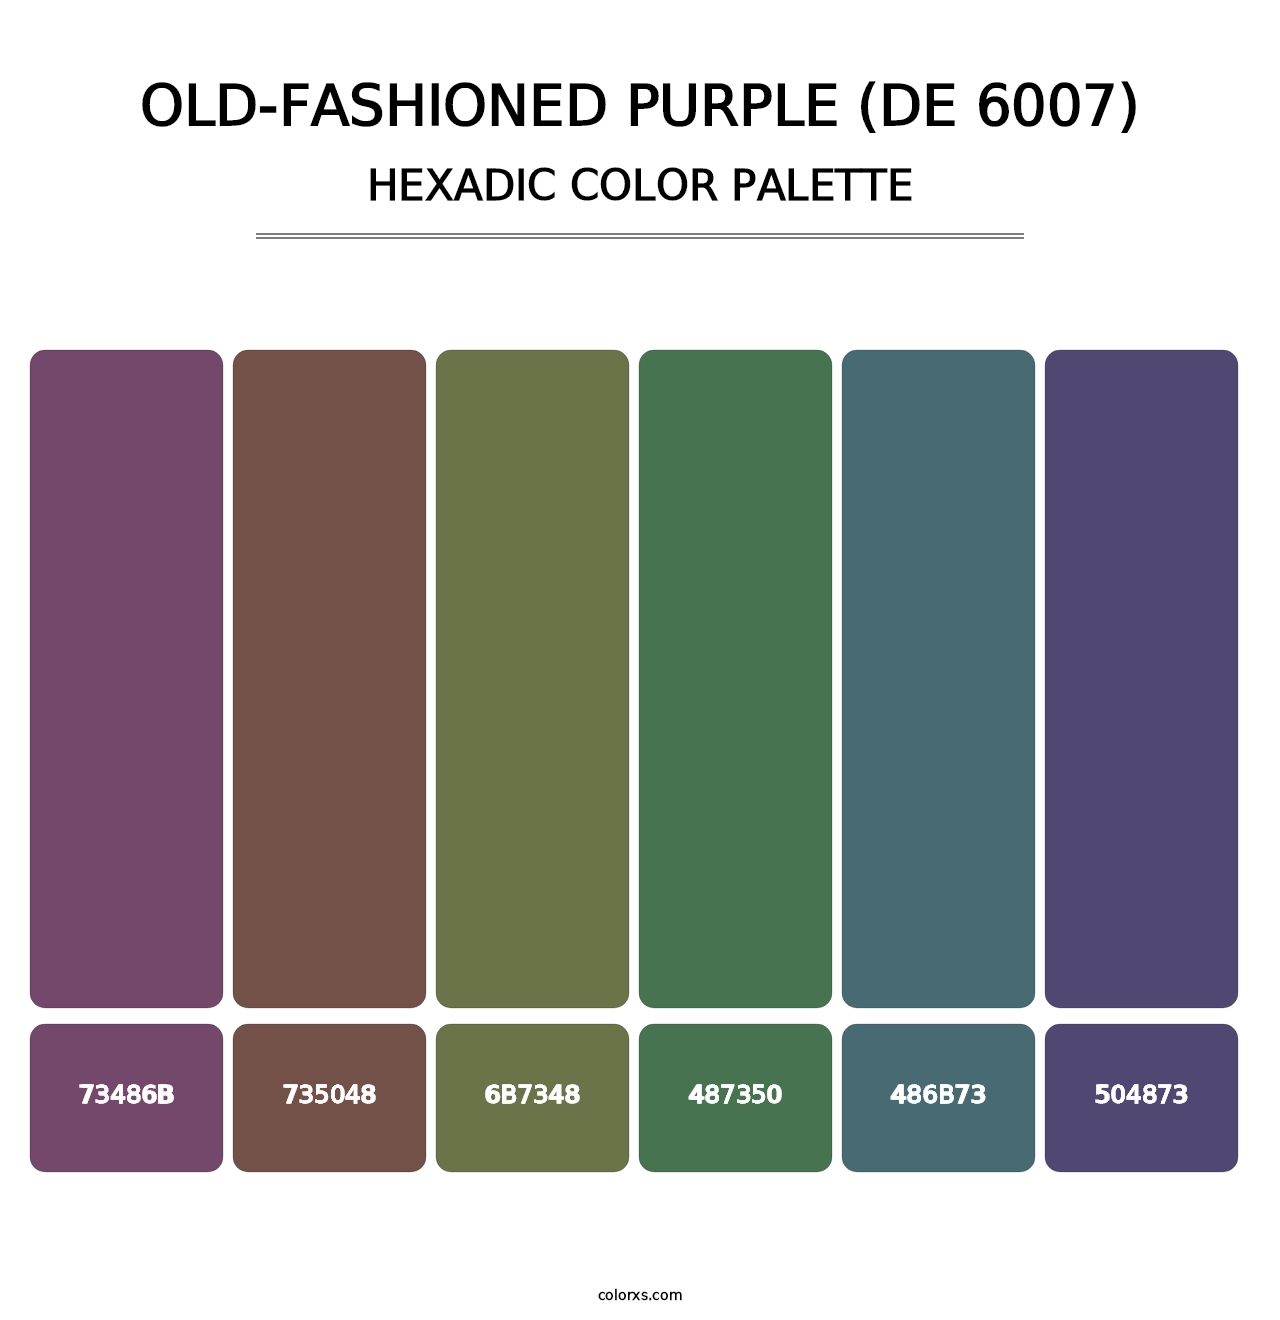 Old-Fashioned Purple (DE 6007) - Hexadic Color Palette